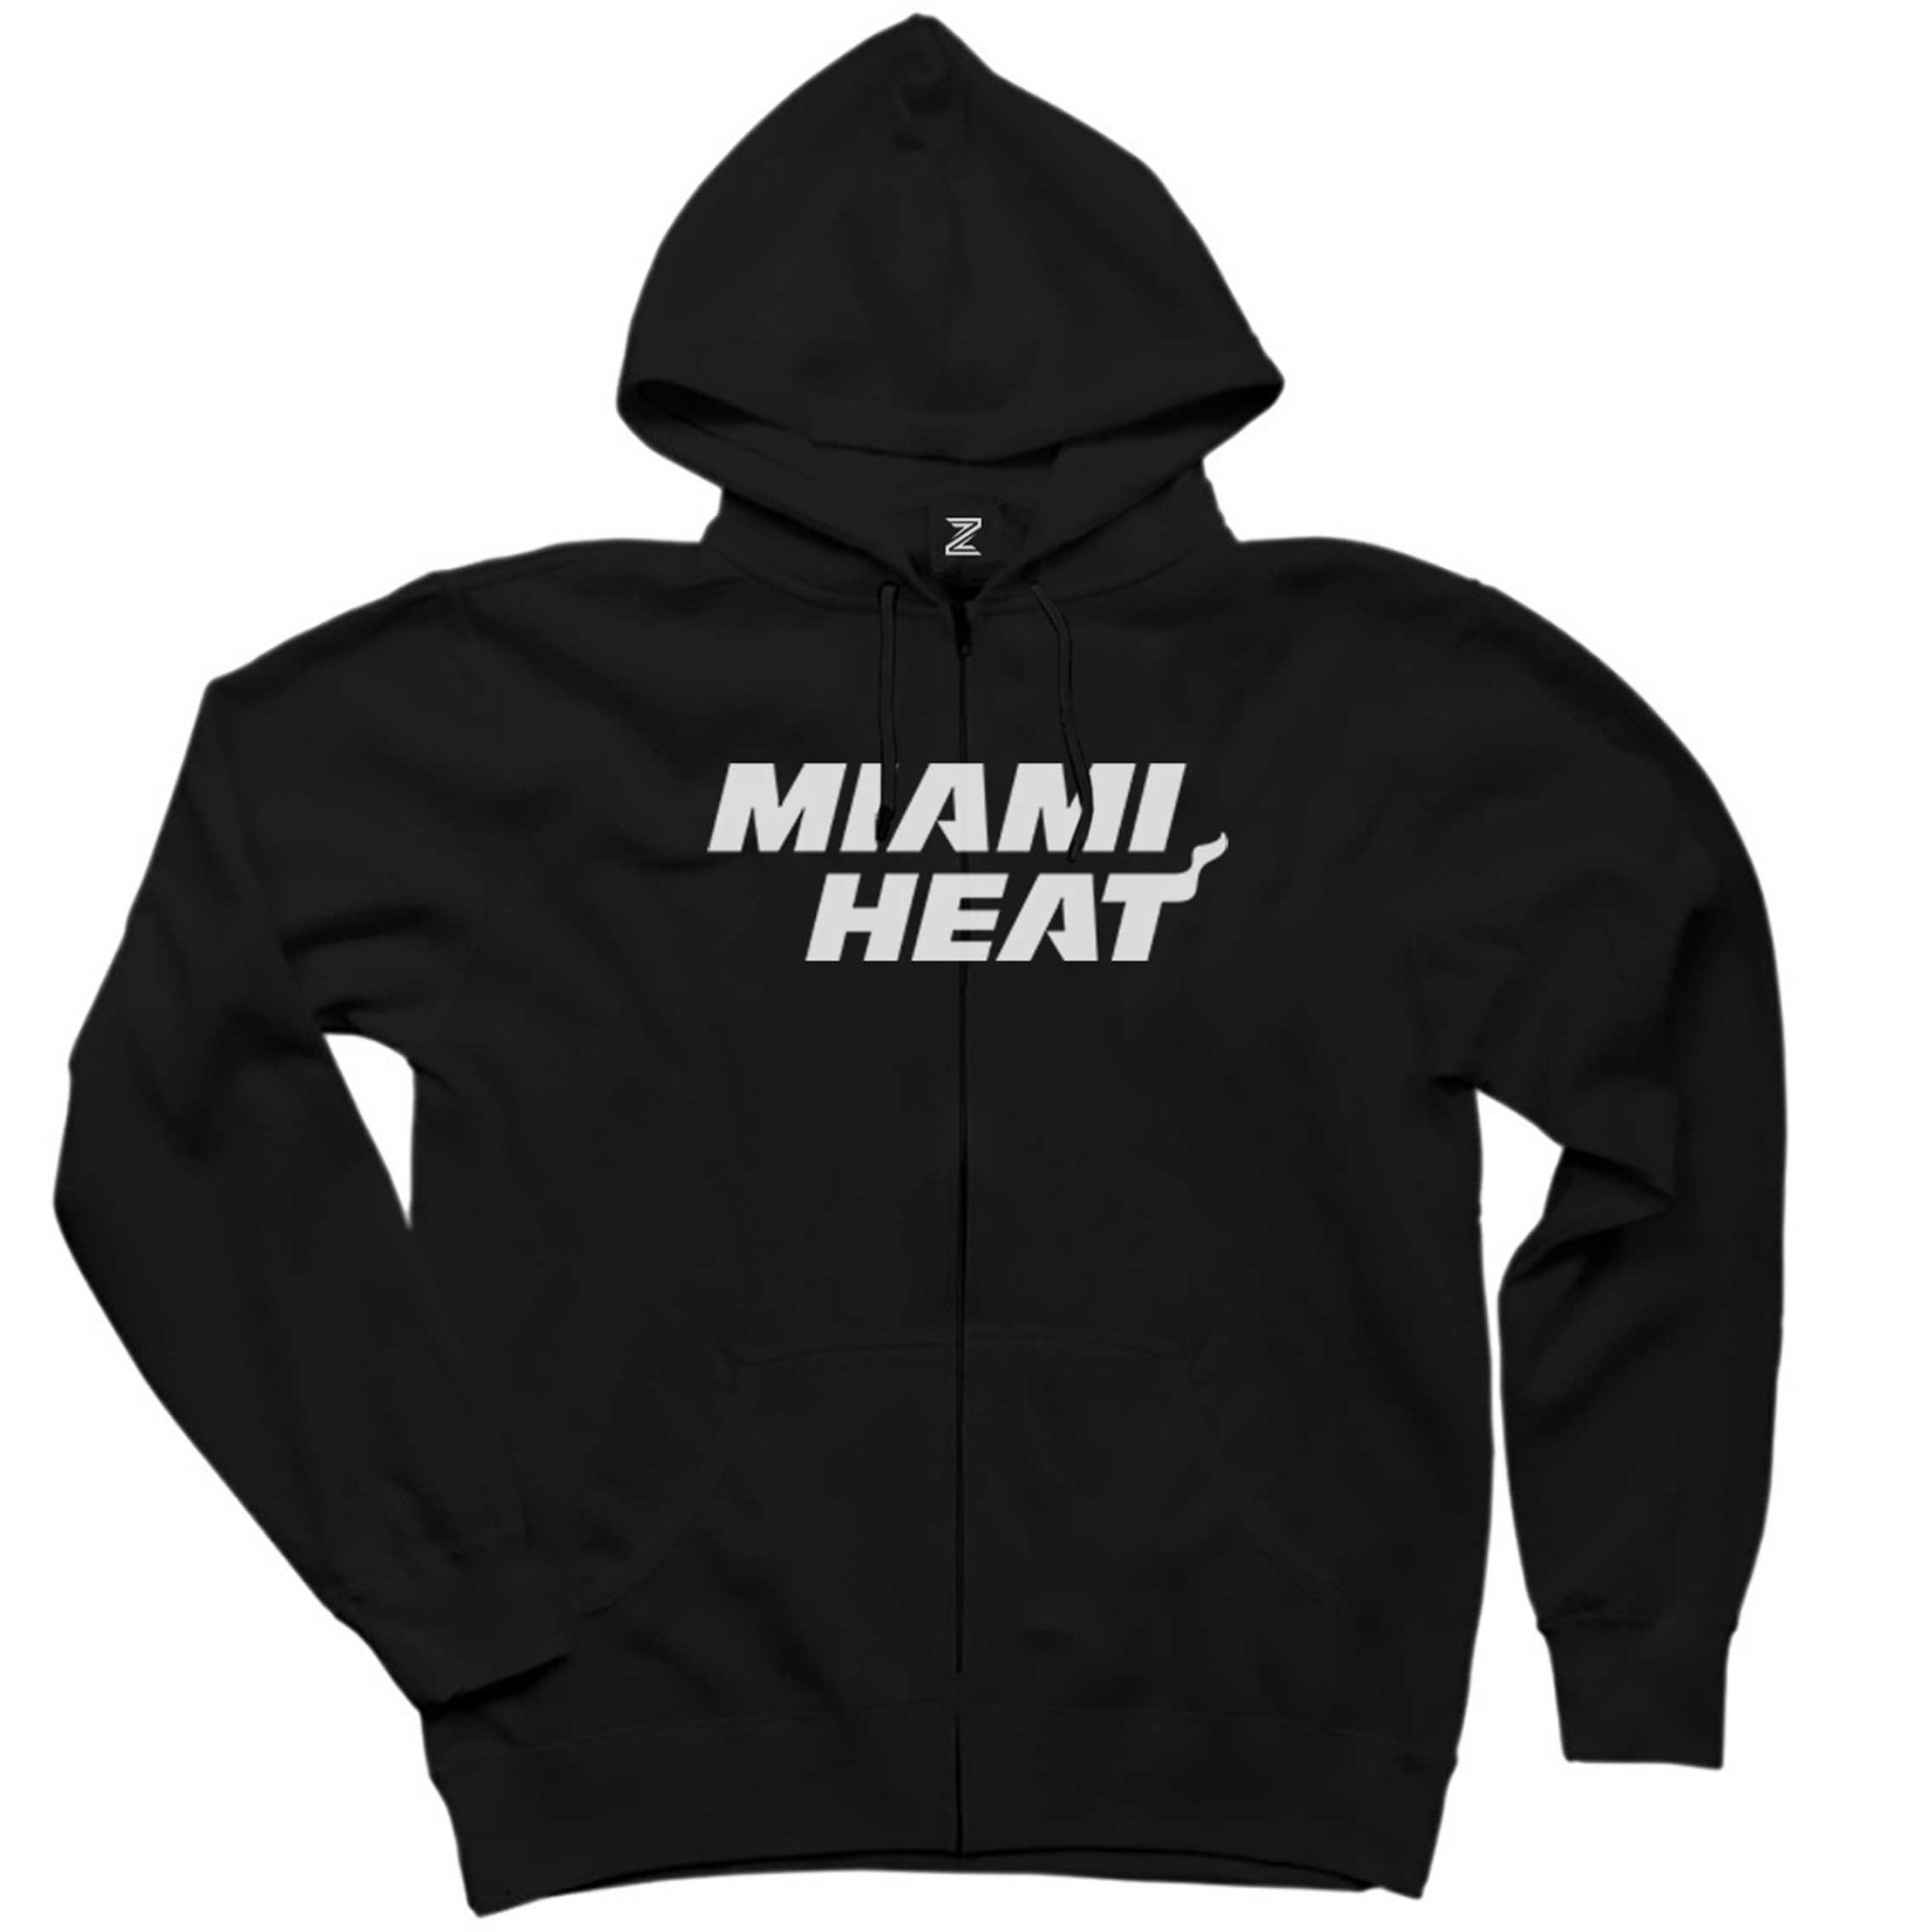 Miami Heat White Siyah Fermuarlı Kapşonlu Sweatshirt